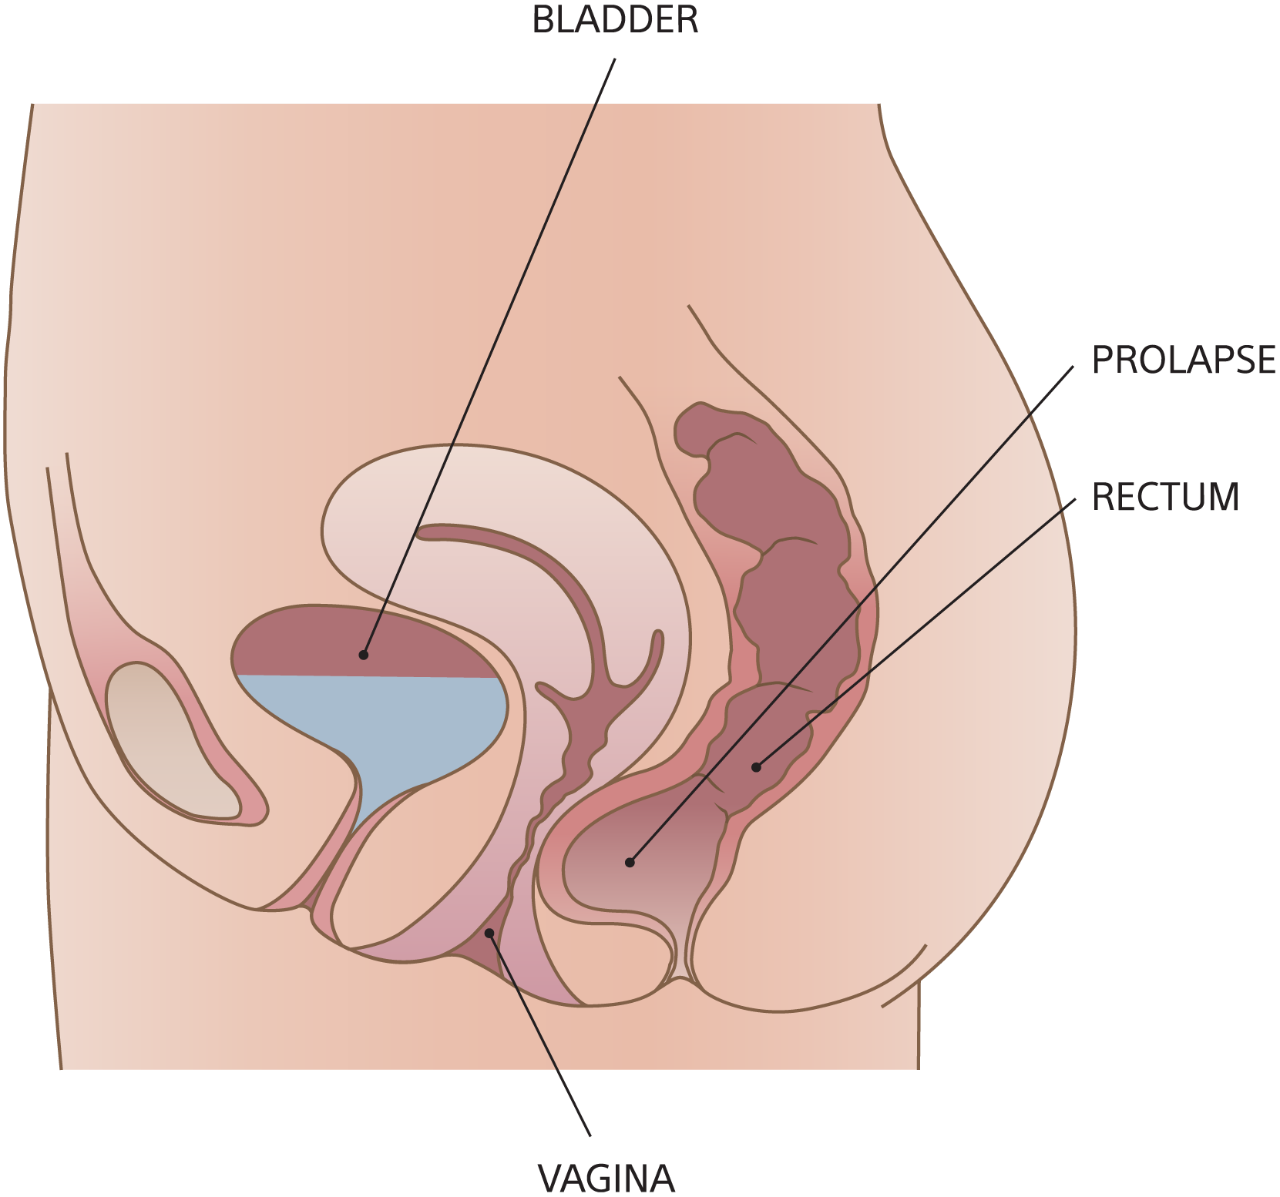 Diagram of rectocele with bladder, rectum, vagina, and prolapse.